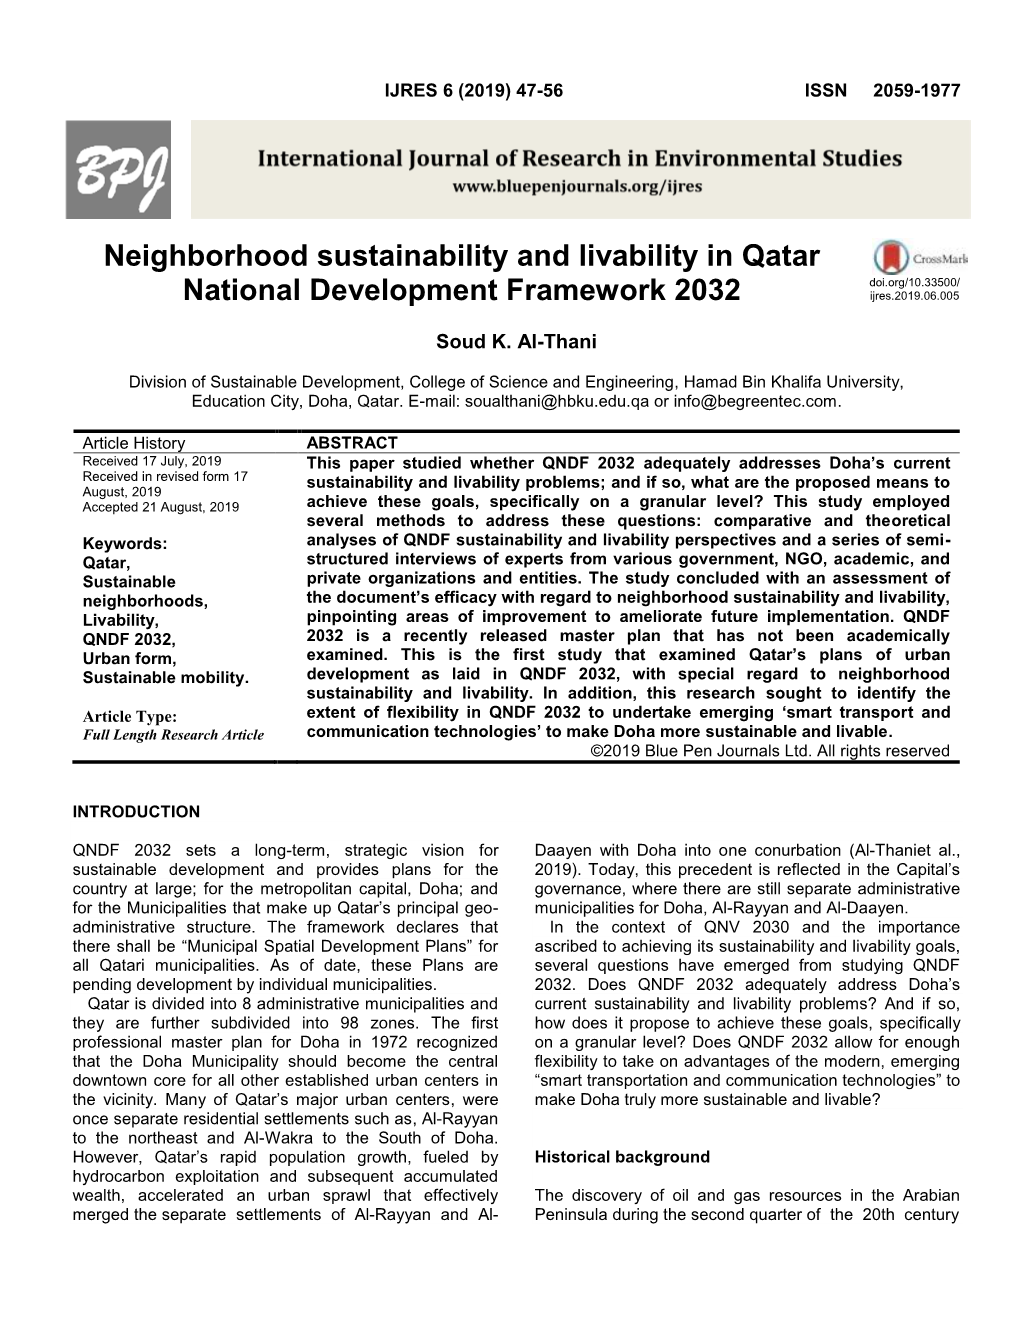 Neighborhood Sustainability and Livability in Qatar National